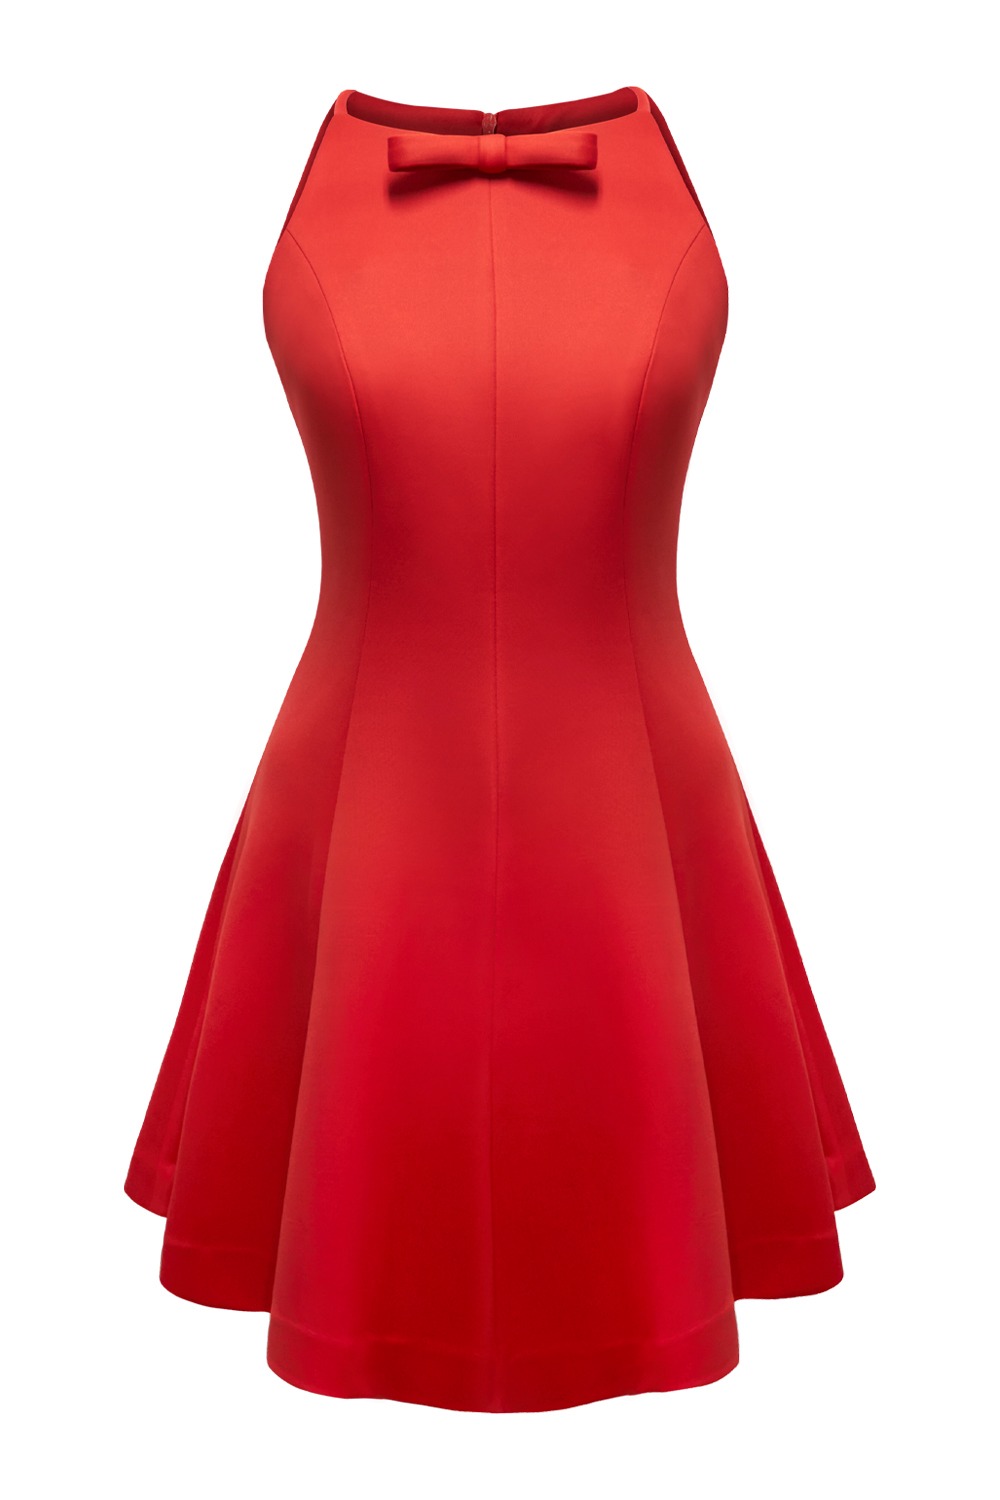 [70% SALE] Ribbon tie halter dress (Red)